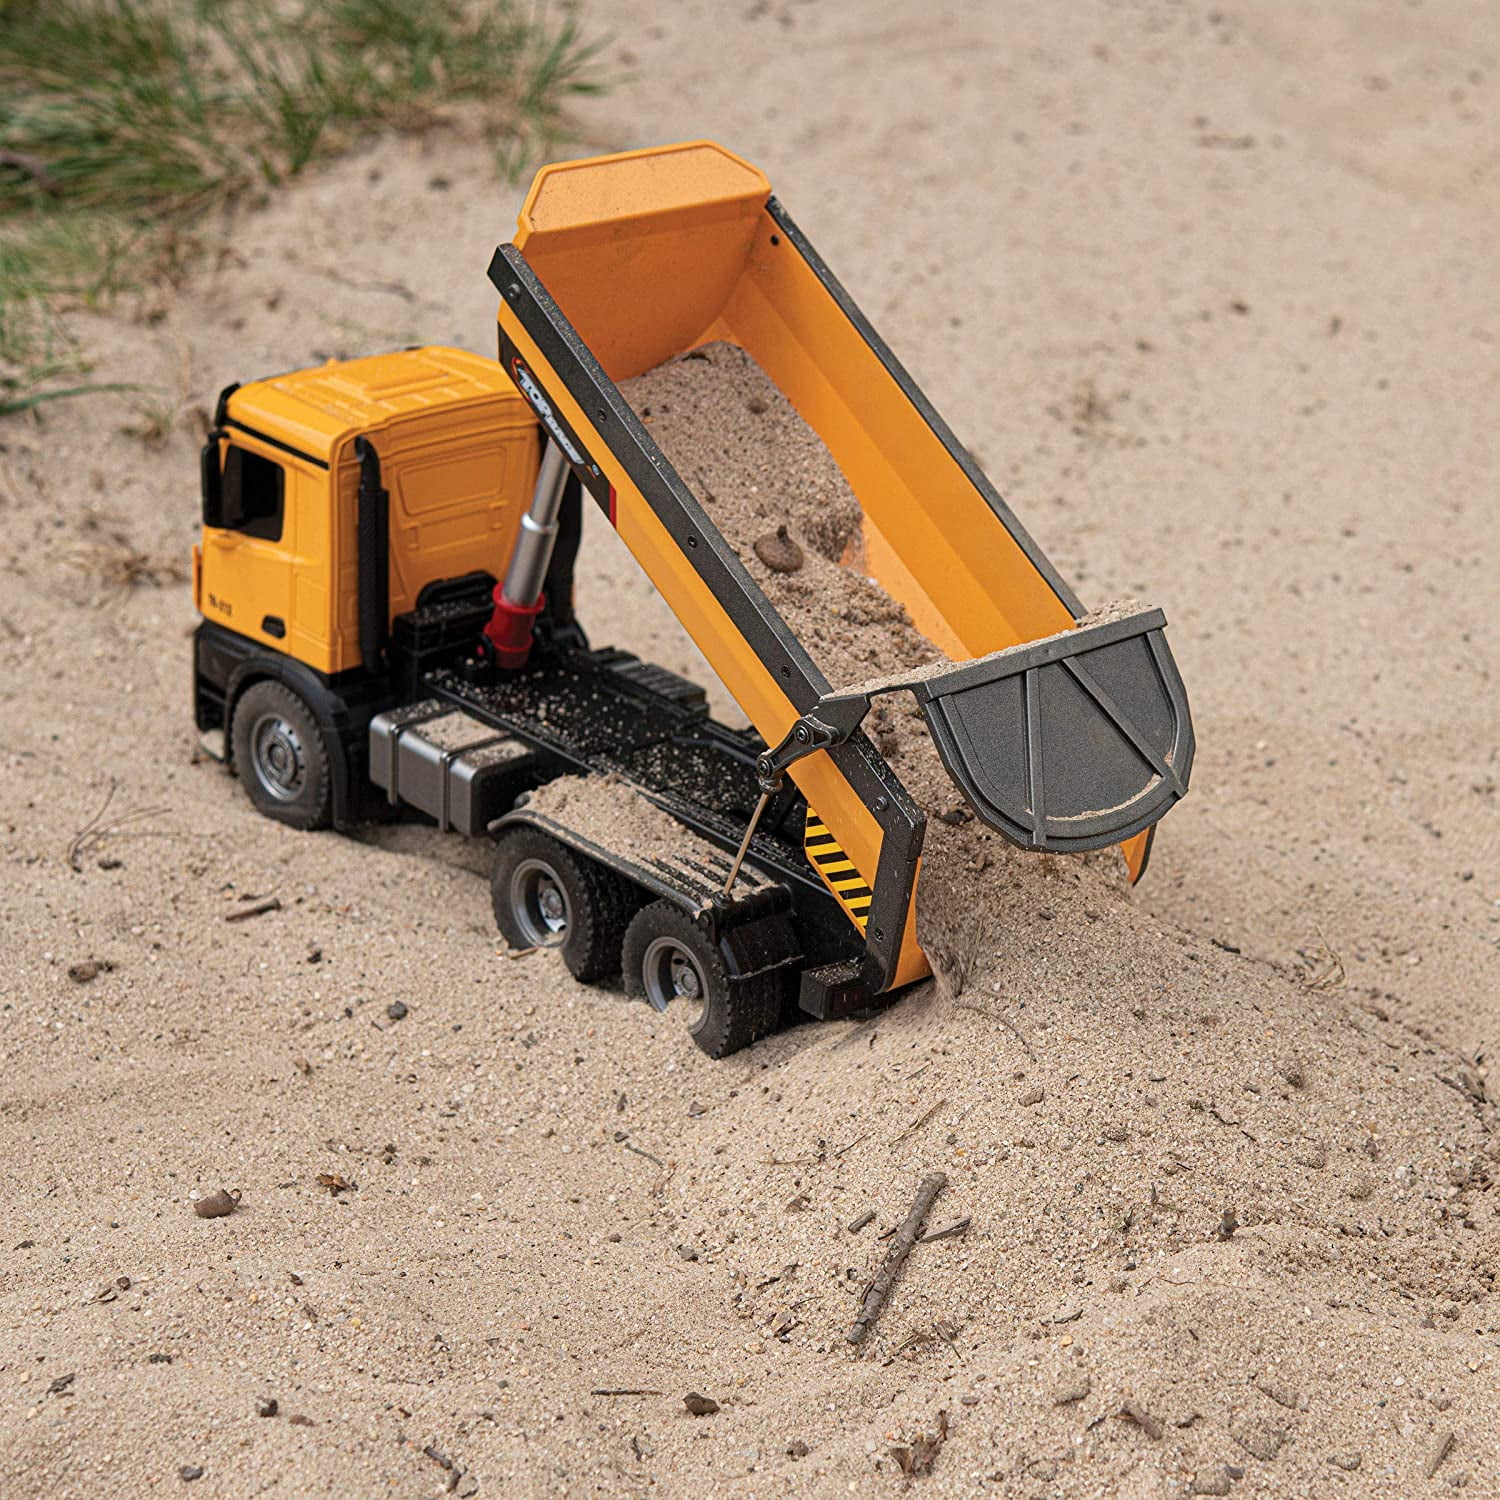 Fisca Rc Truck 6 Ch 24G Alloy Remote Control Dump Truck Excavator 